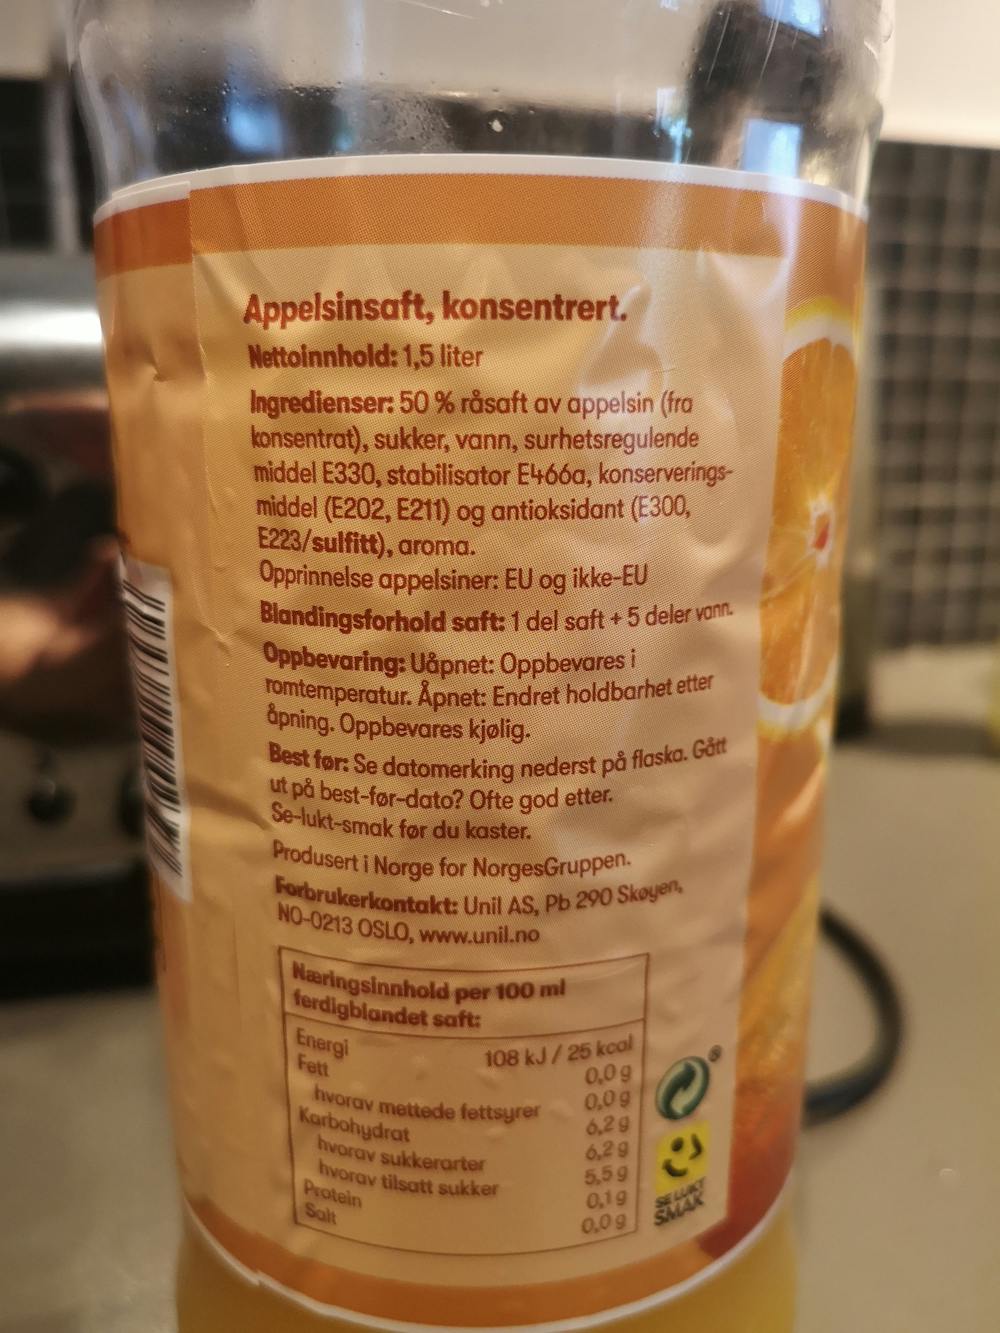 Ingredienslisten til Appelsinsaft, First Price